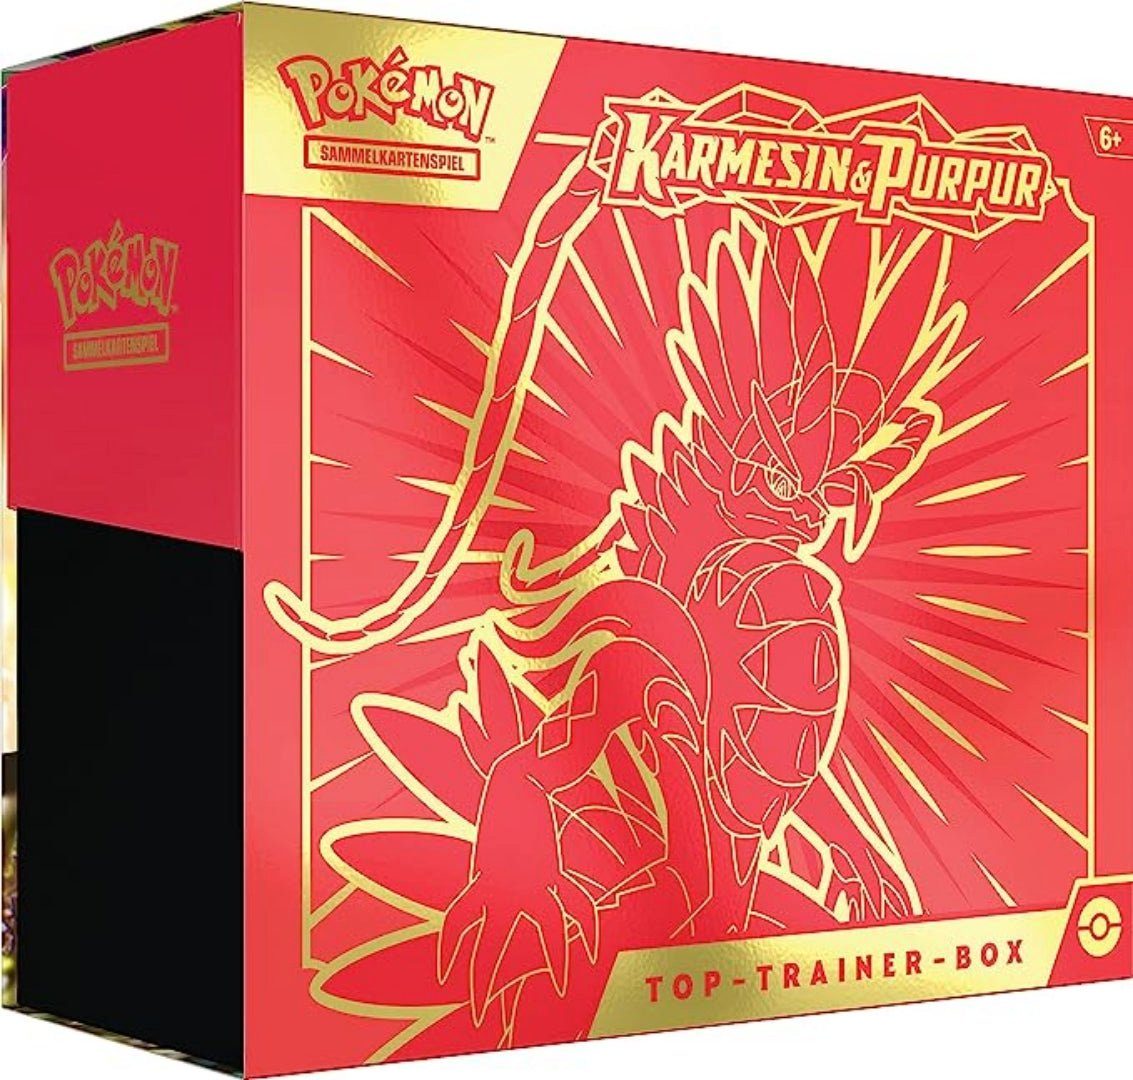 The Pokémon Company International Sammelkarte Pokemon Karmesin & Purpur  SV1DE Top Trainer Box Koraidon (deutsch) - 9 Booster Packs